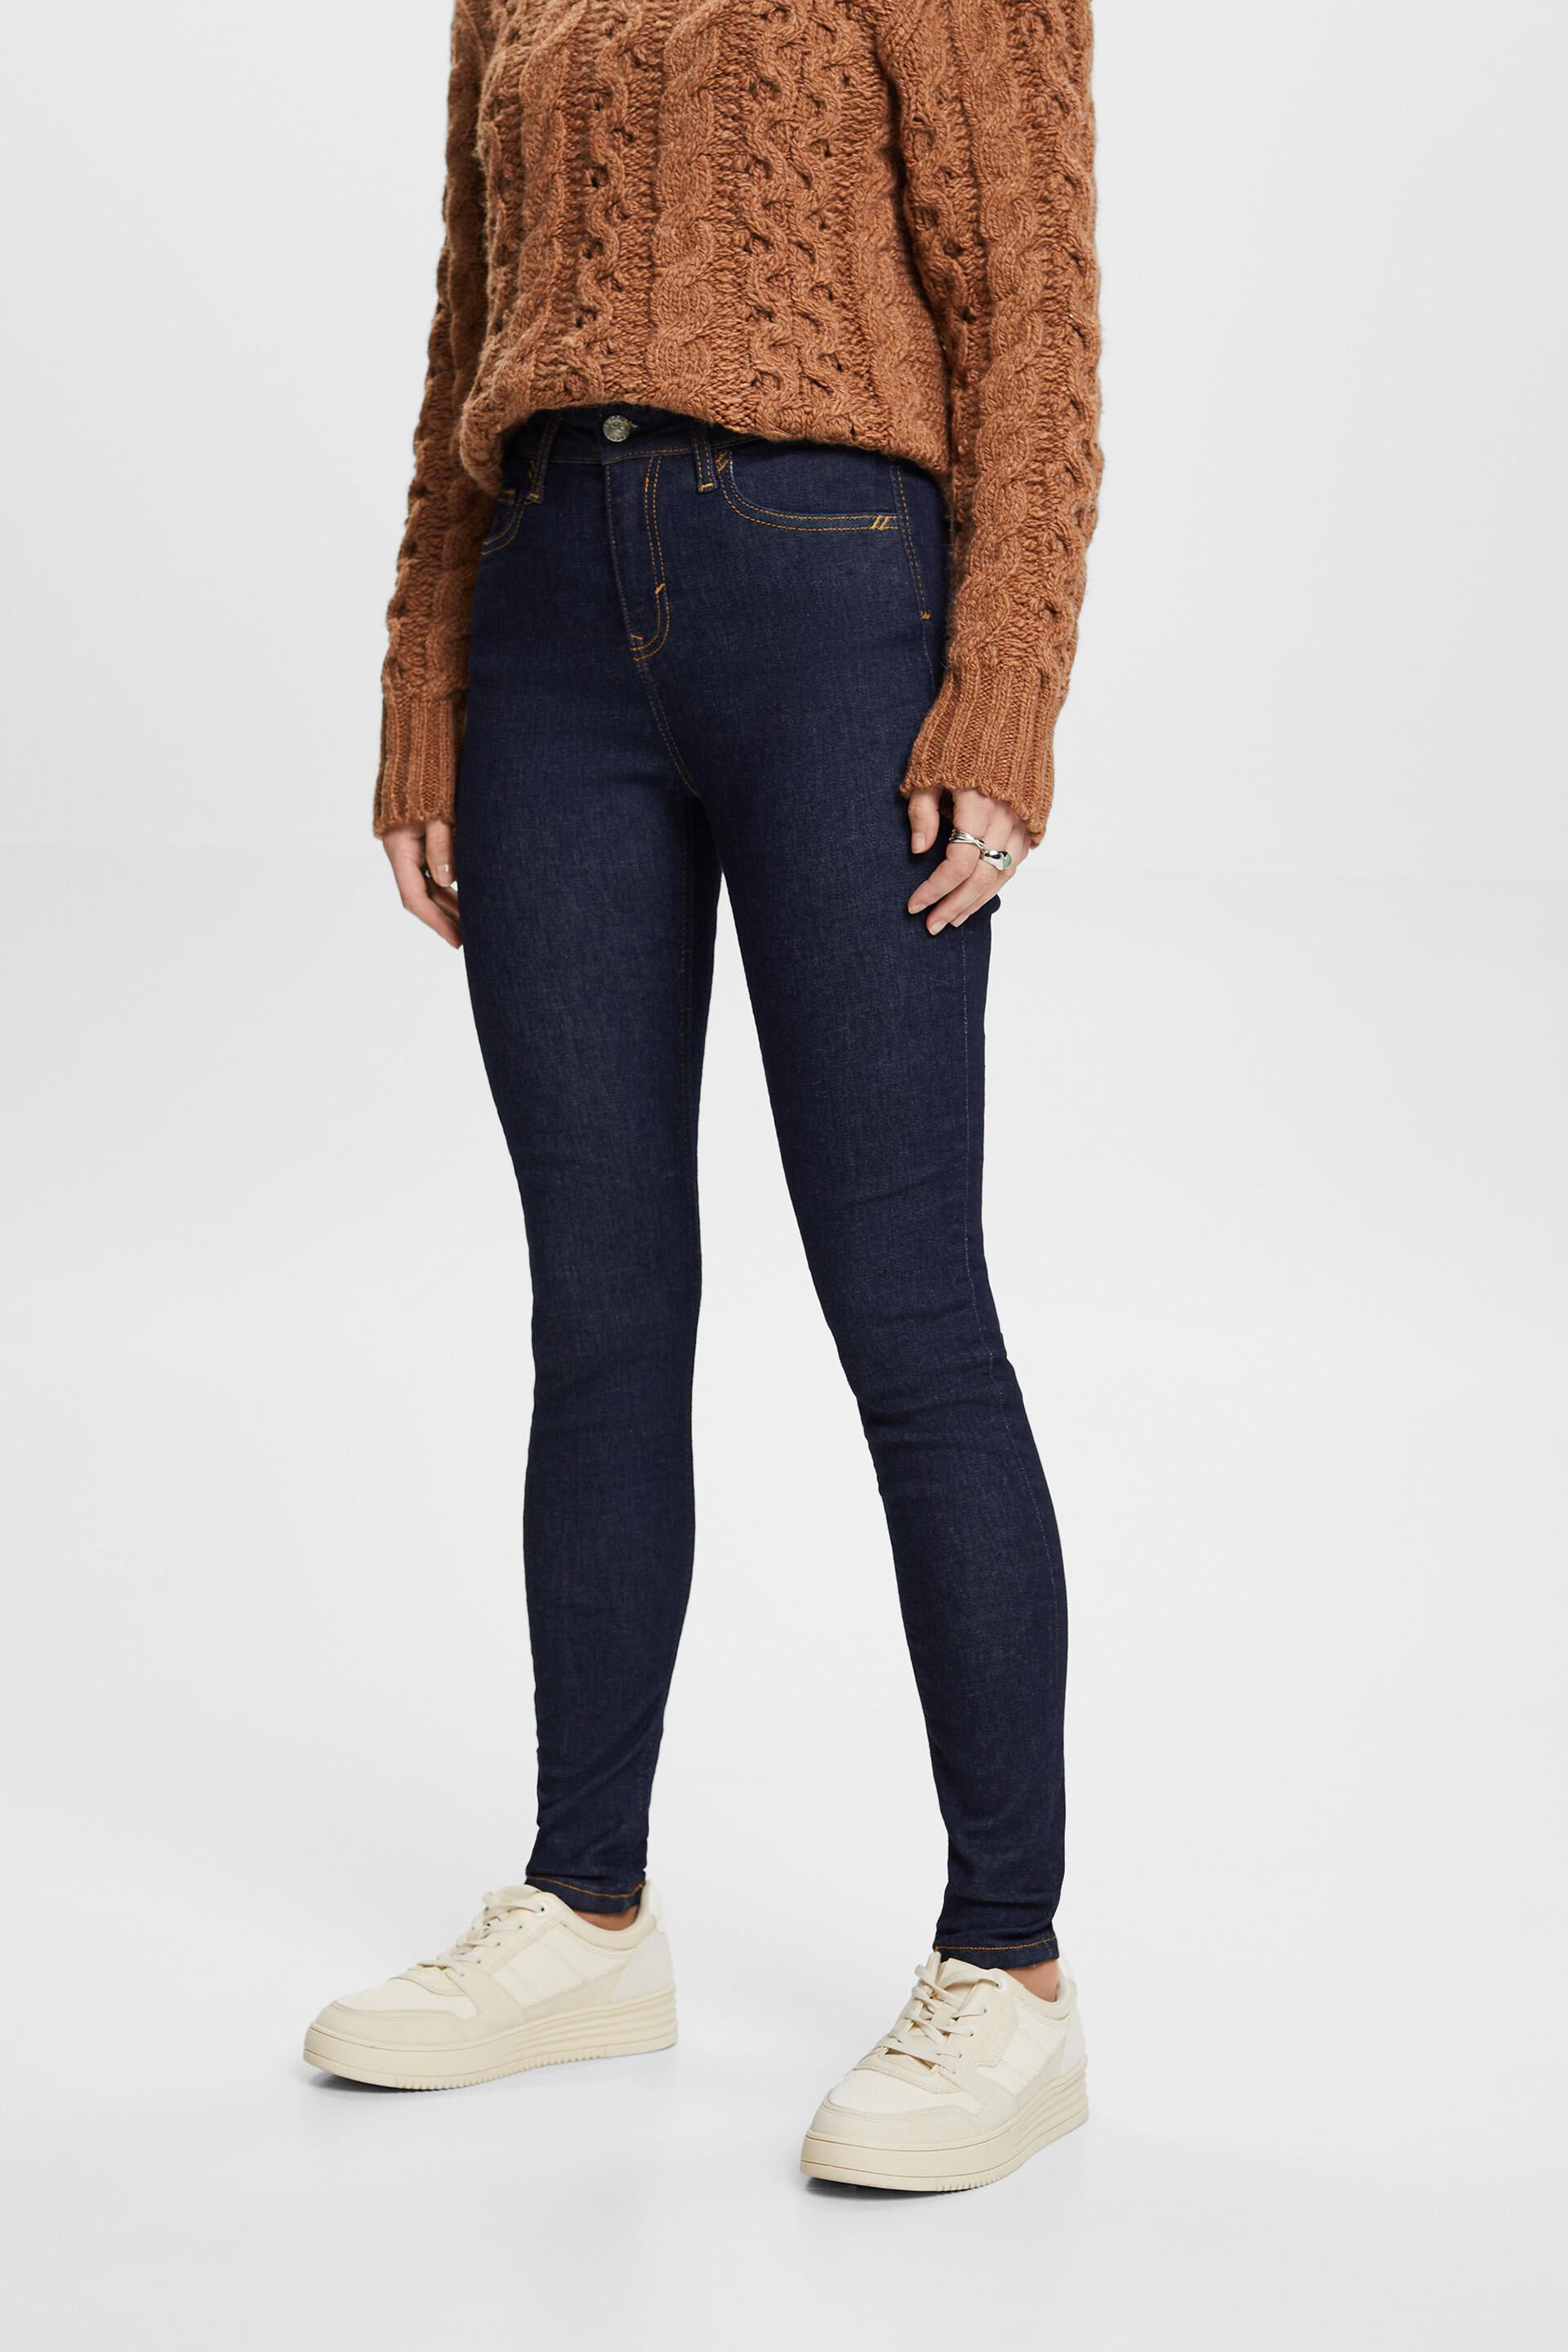 Esprit jeans High-rise skinny